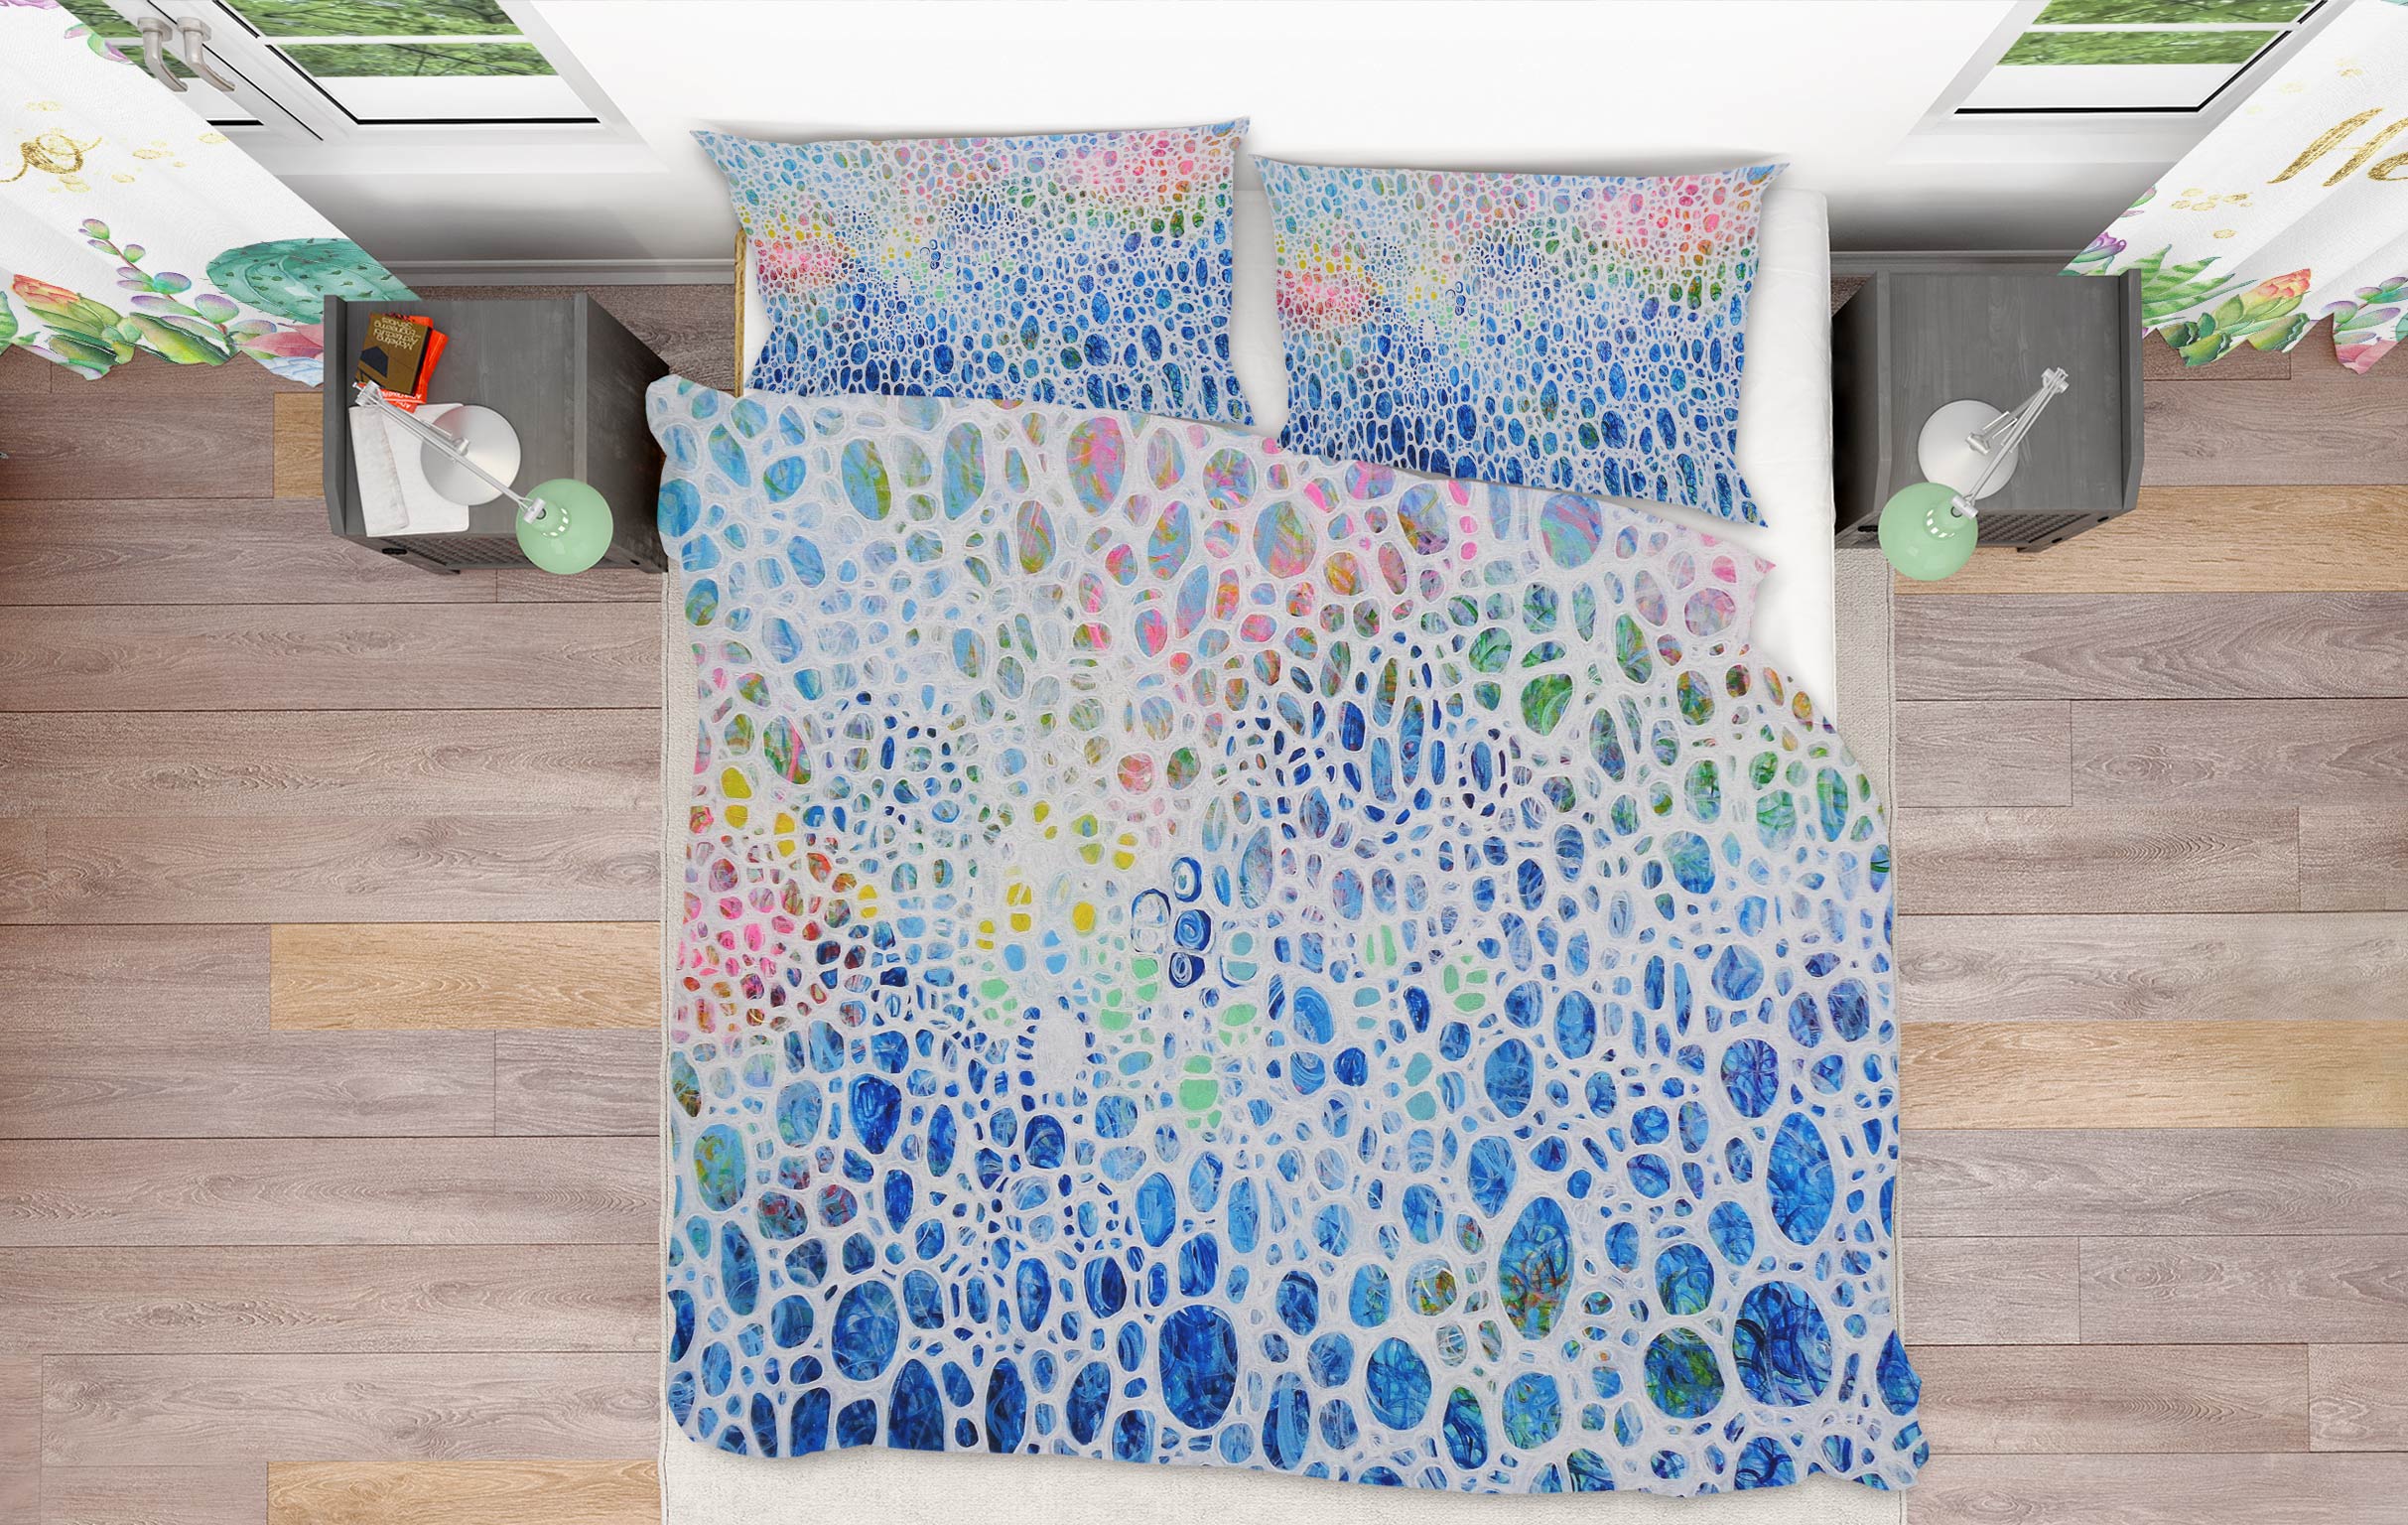 3D Blue Texture 1207 Misako Chida Bedding Bed Pillowcases Quilt Cover Duvet Cover